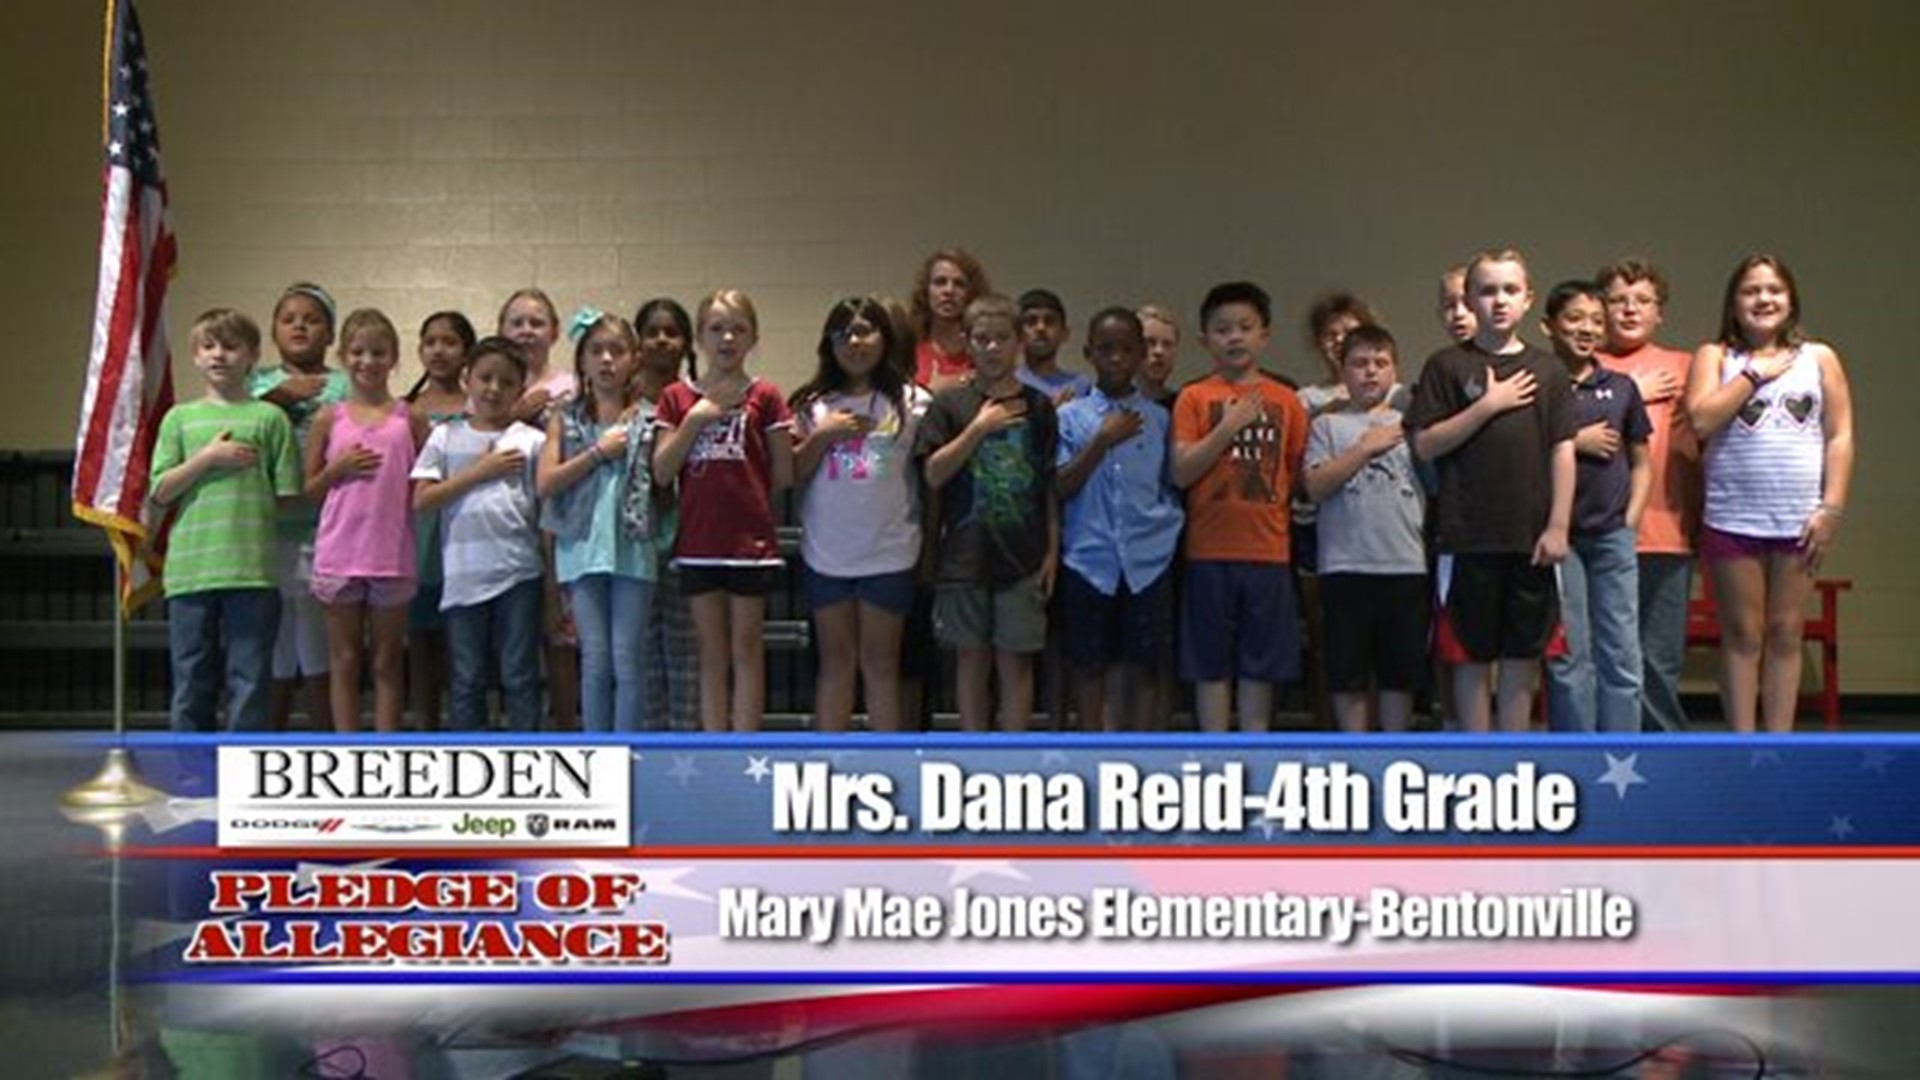 Mary Mae Jones Elementary, Bentonville - Mrs. Dana Reid - 4th Grade